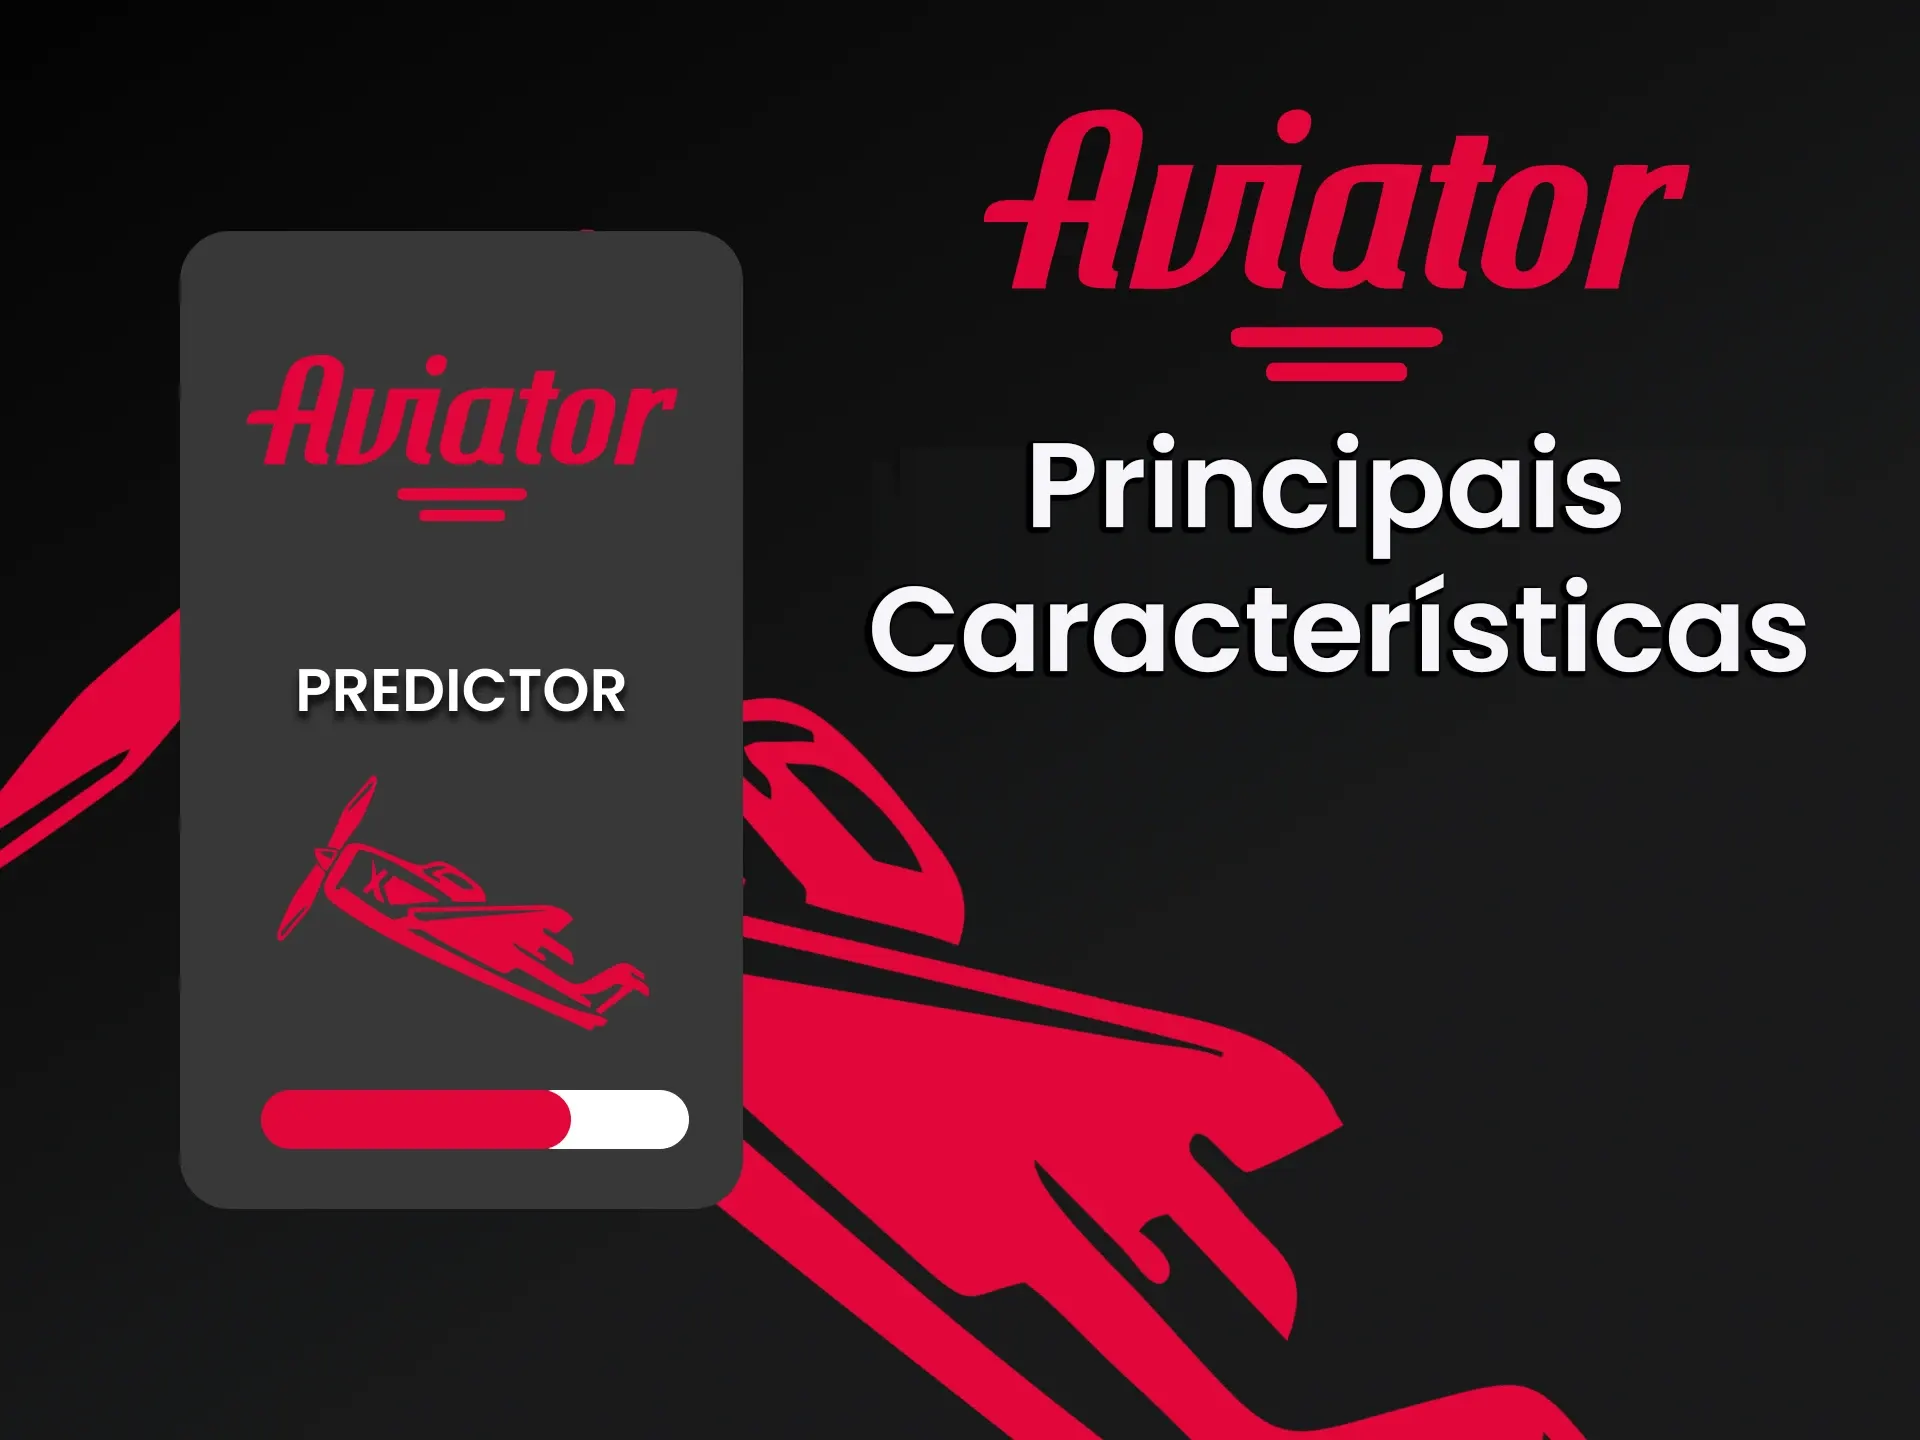 Vamos informá-lo sobre os requisitos básicos do Predictor para Aviator.